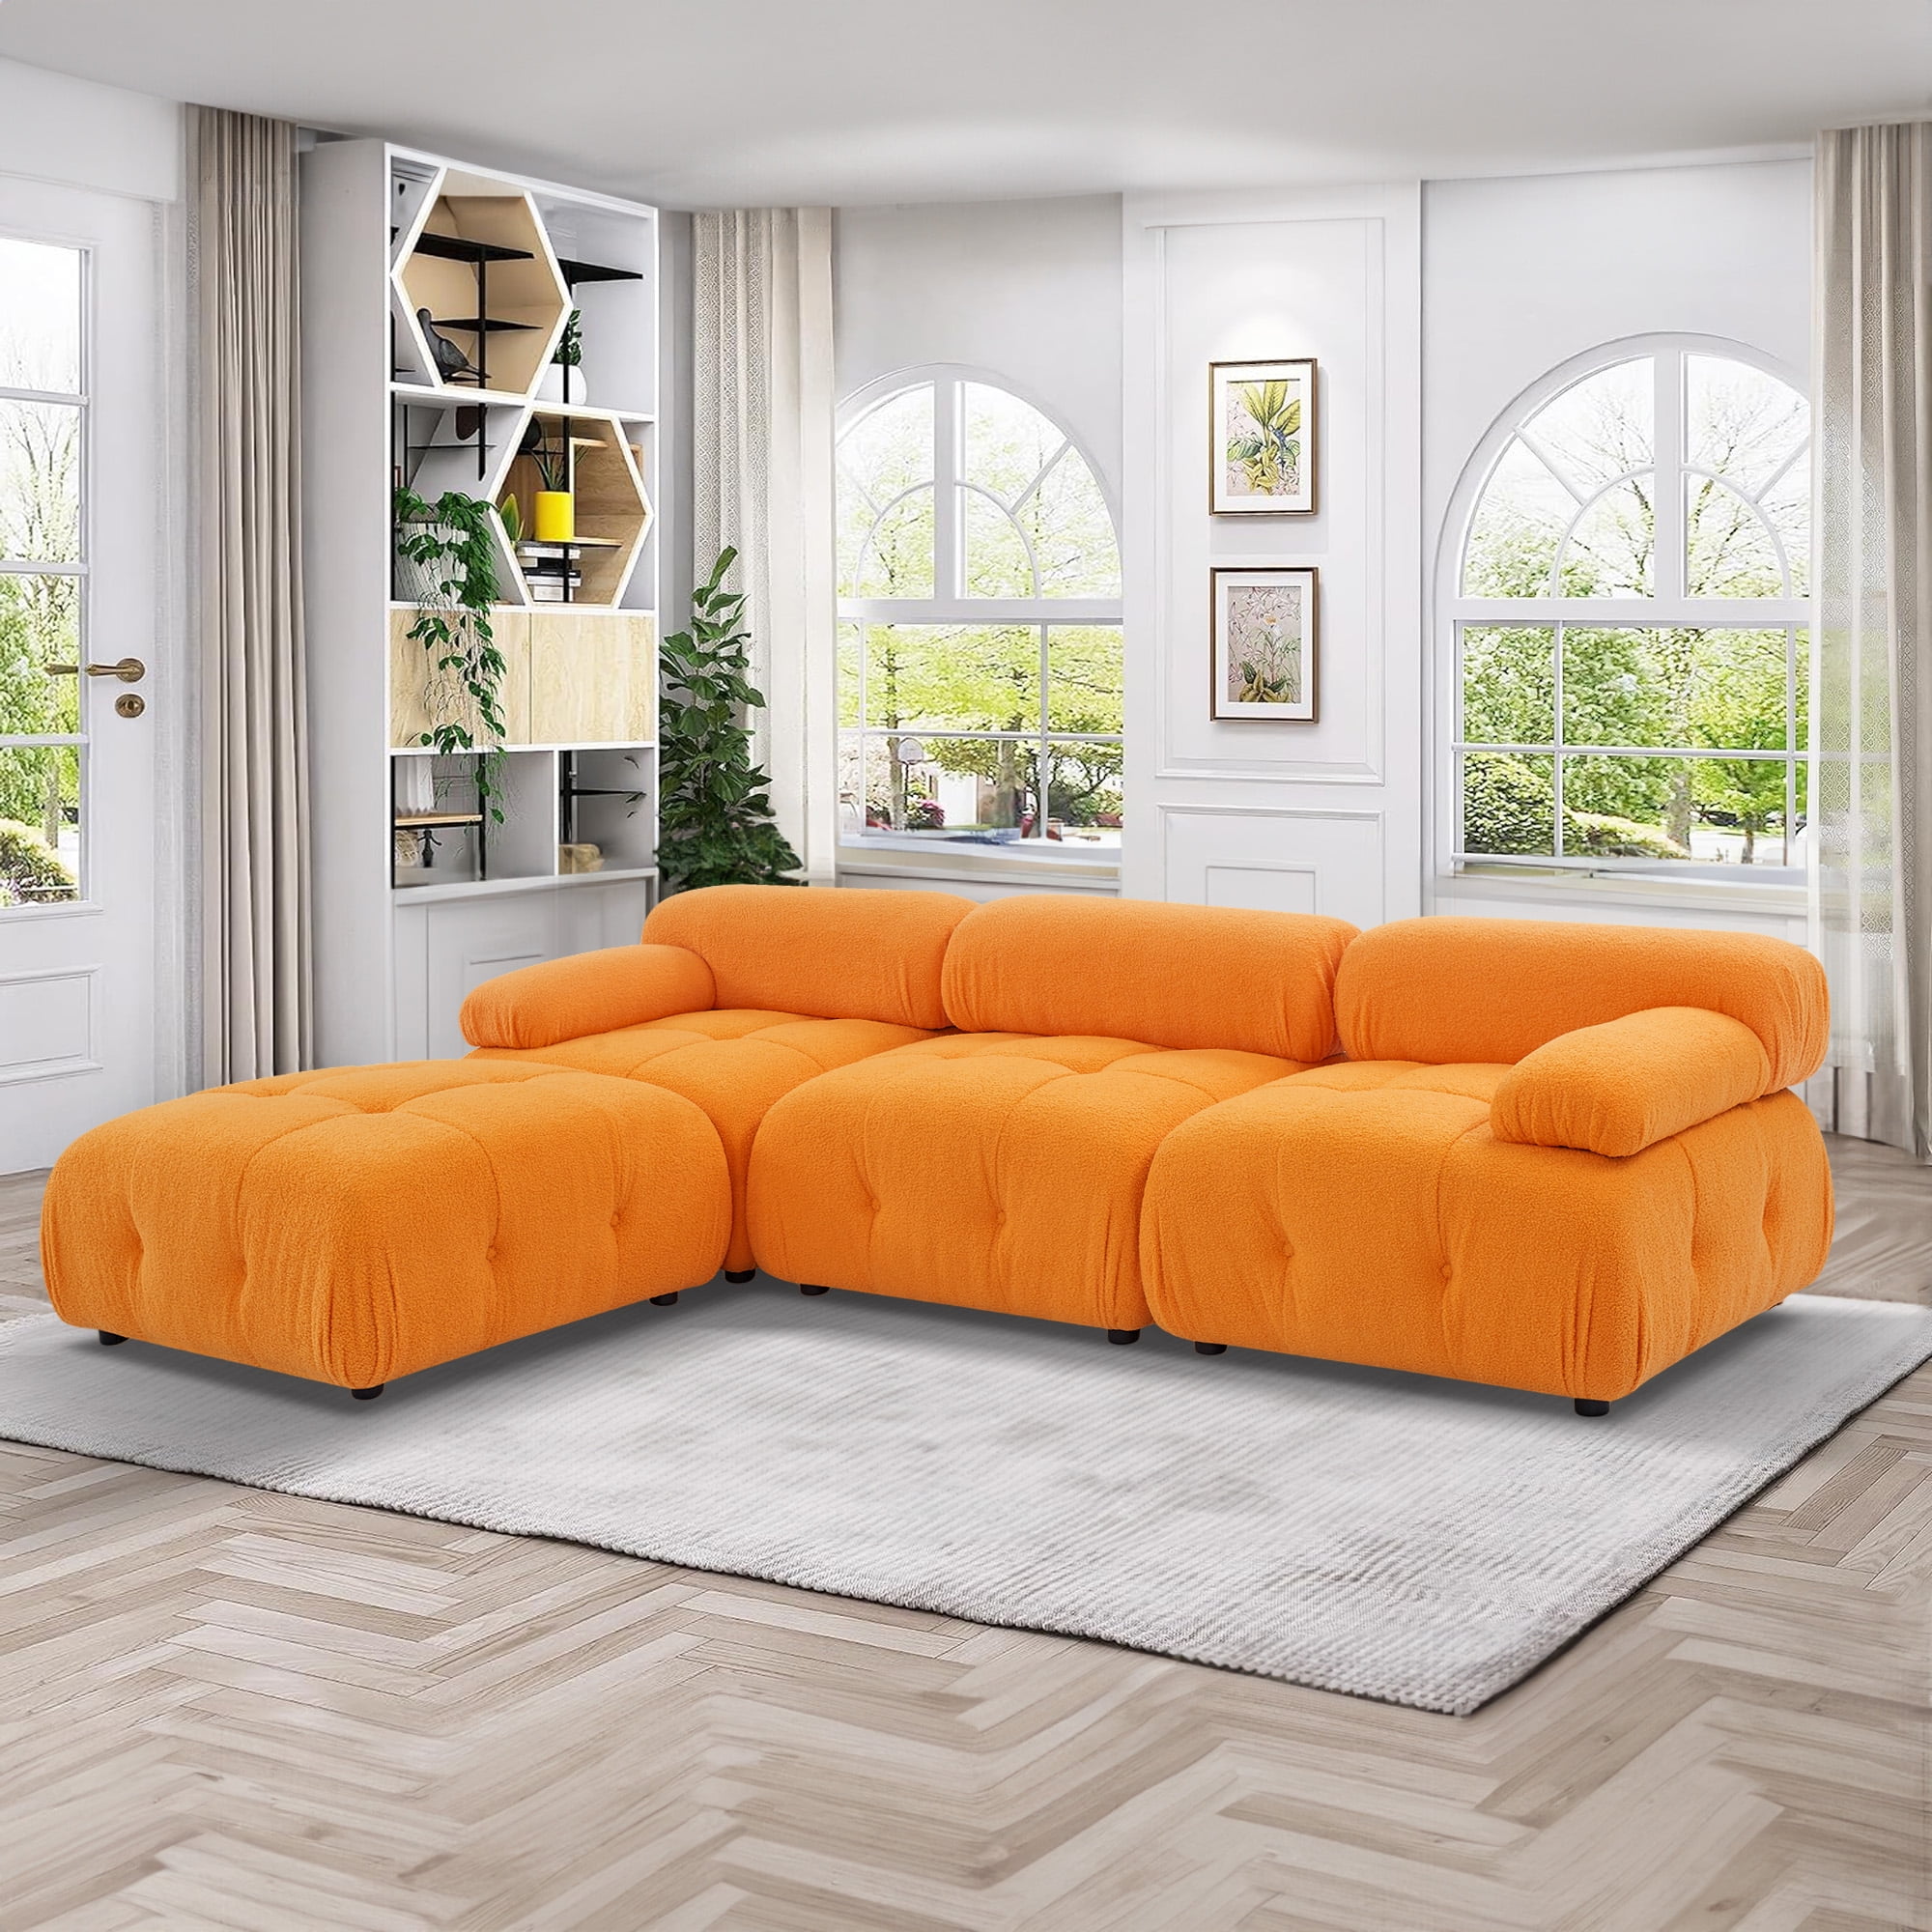 Aukfa 93 Sectional Sofa Living Room Modular Couch With Ottoman Pillow Top Arms Teddy Fleece Orange Com